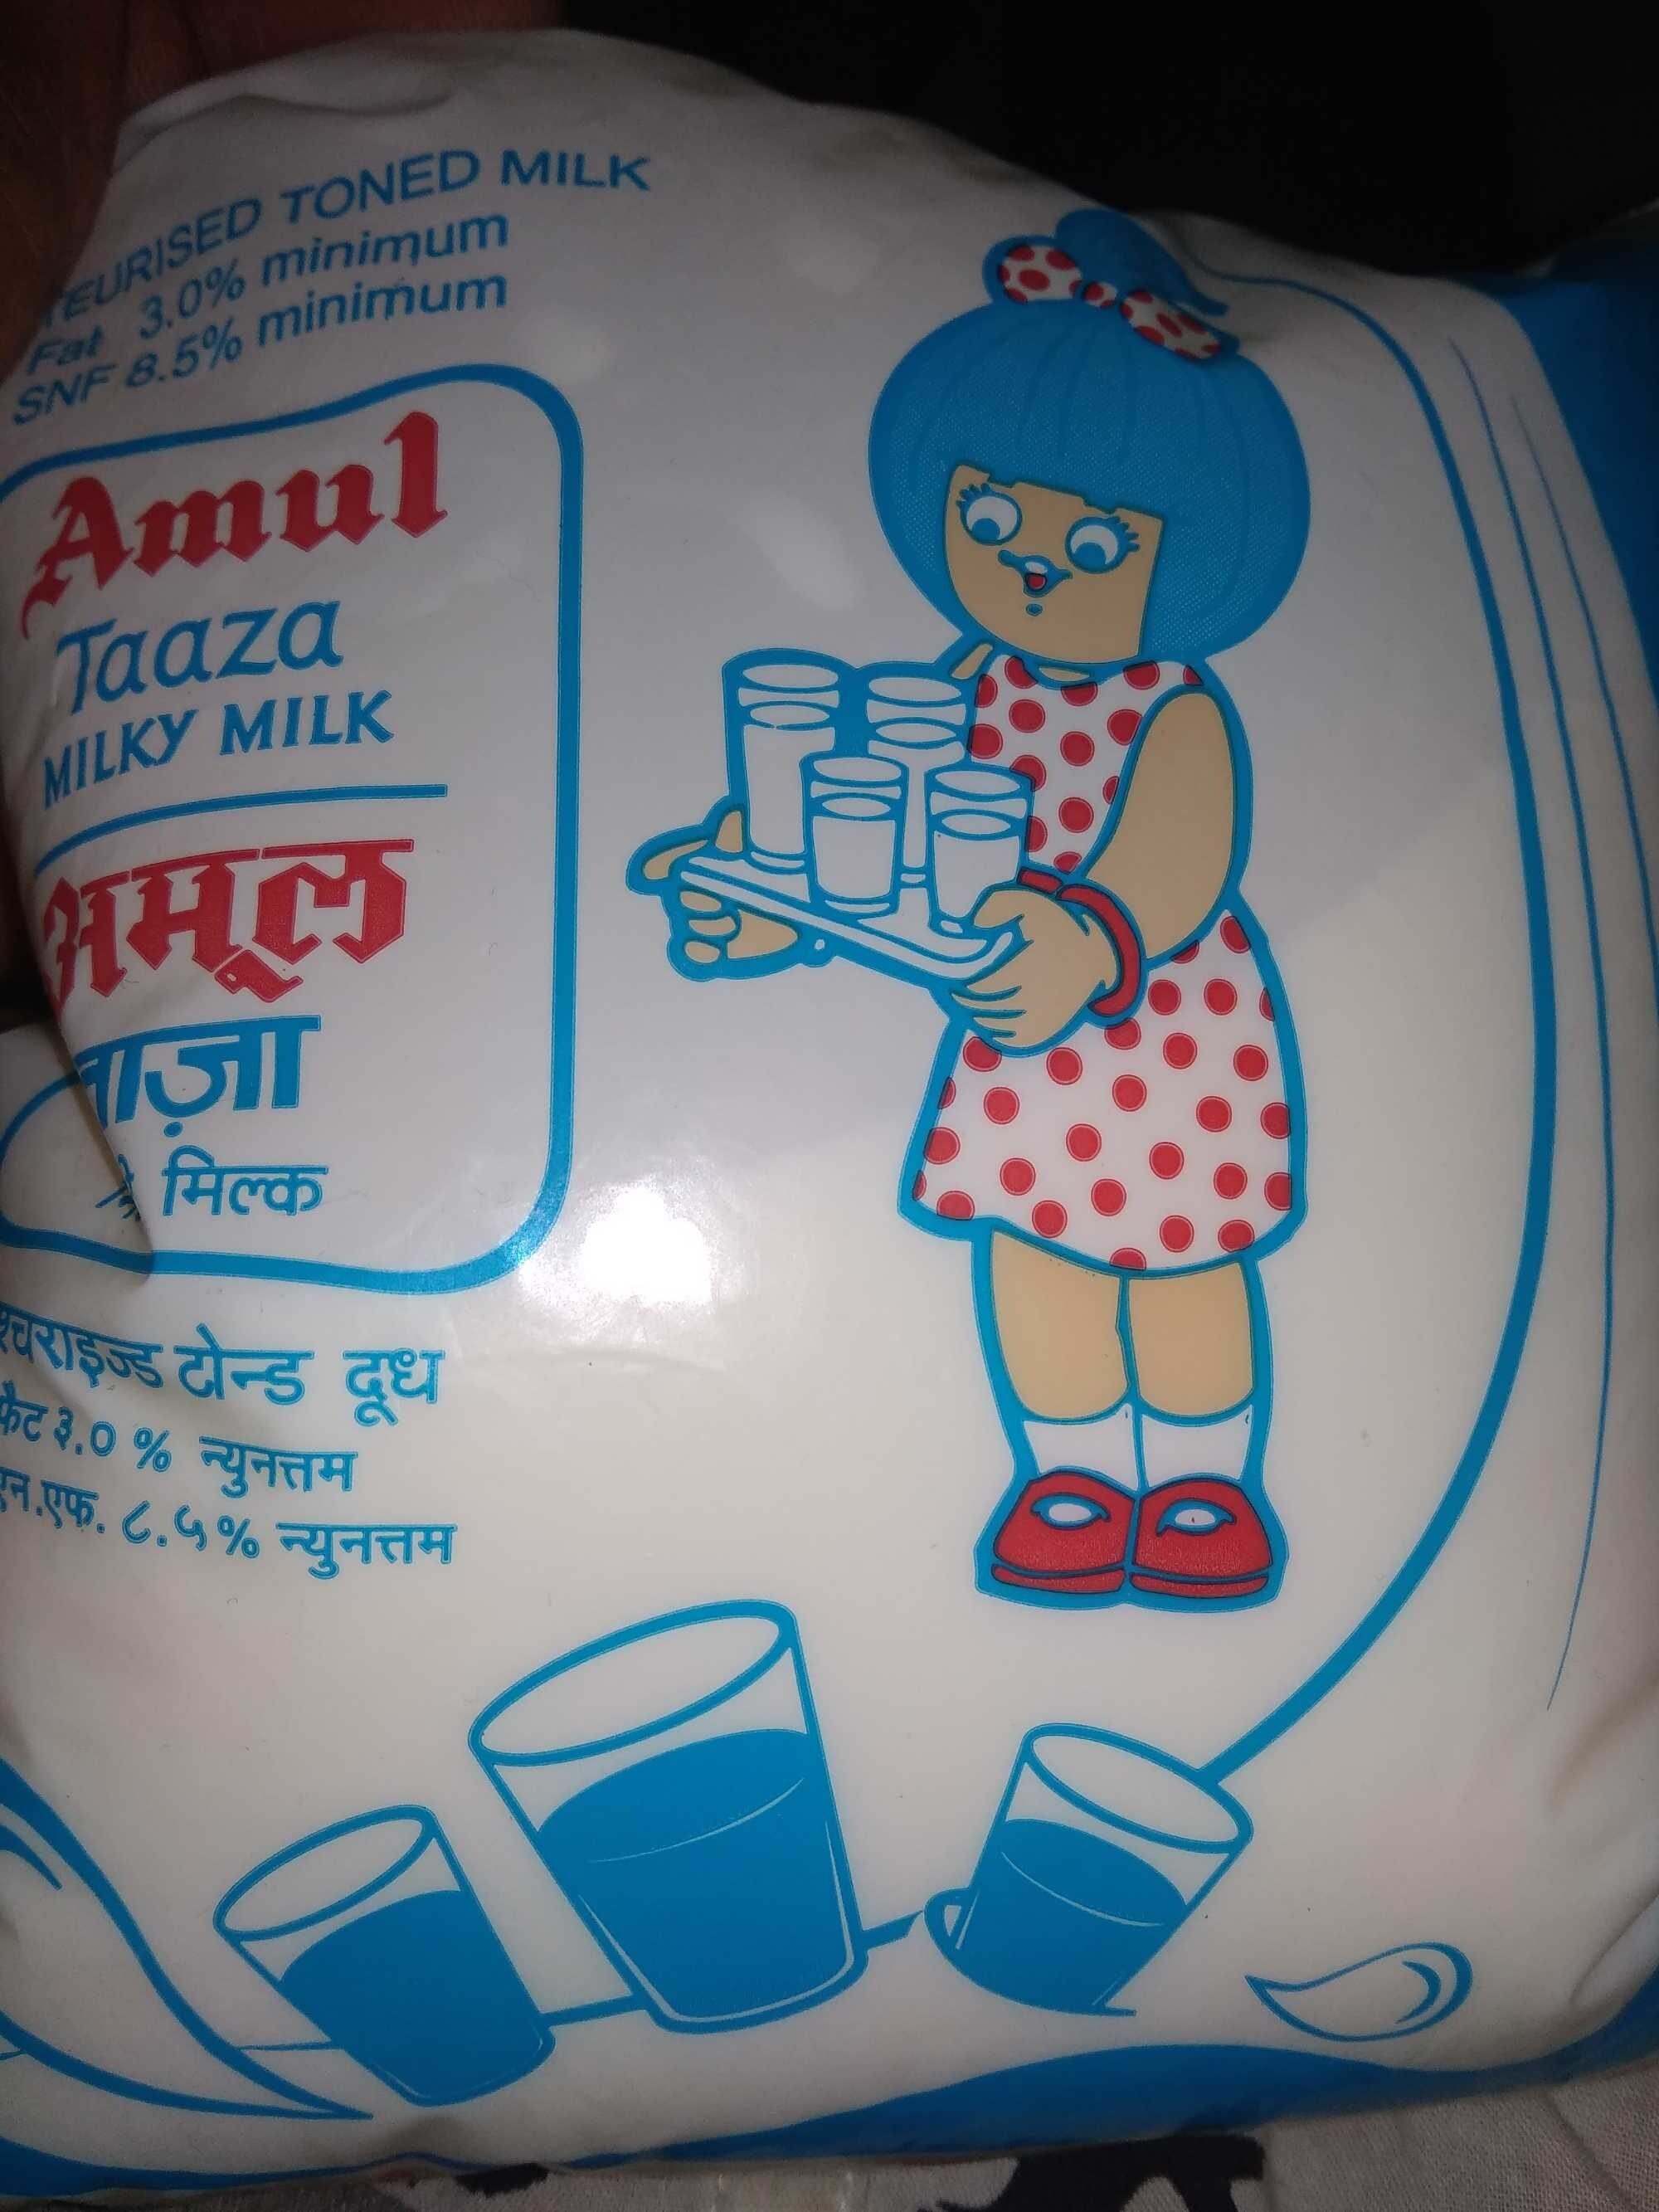 amul taaza toned milk - Product - en